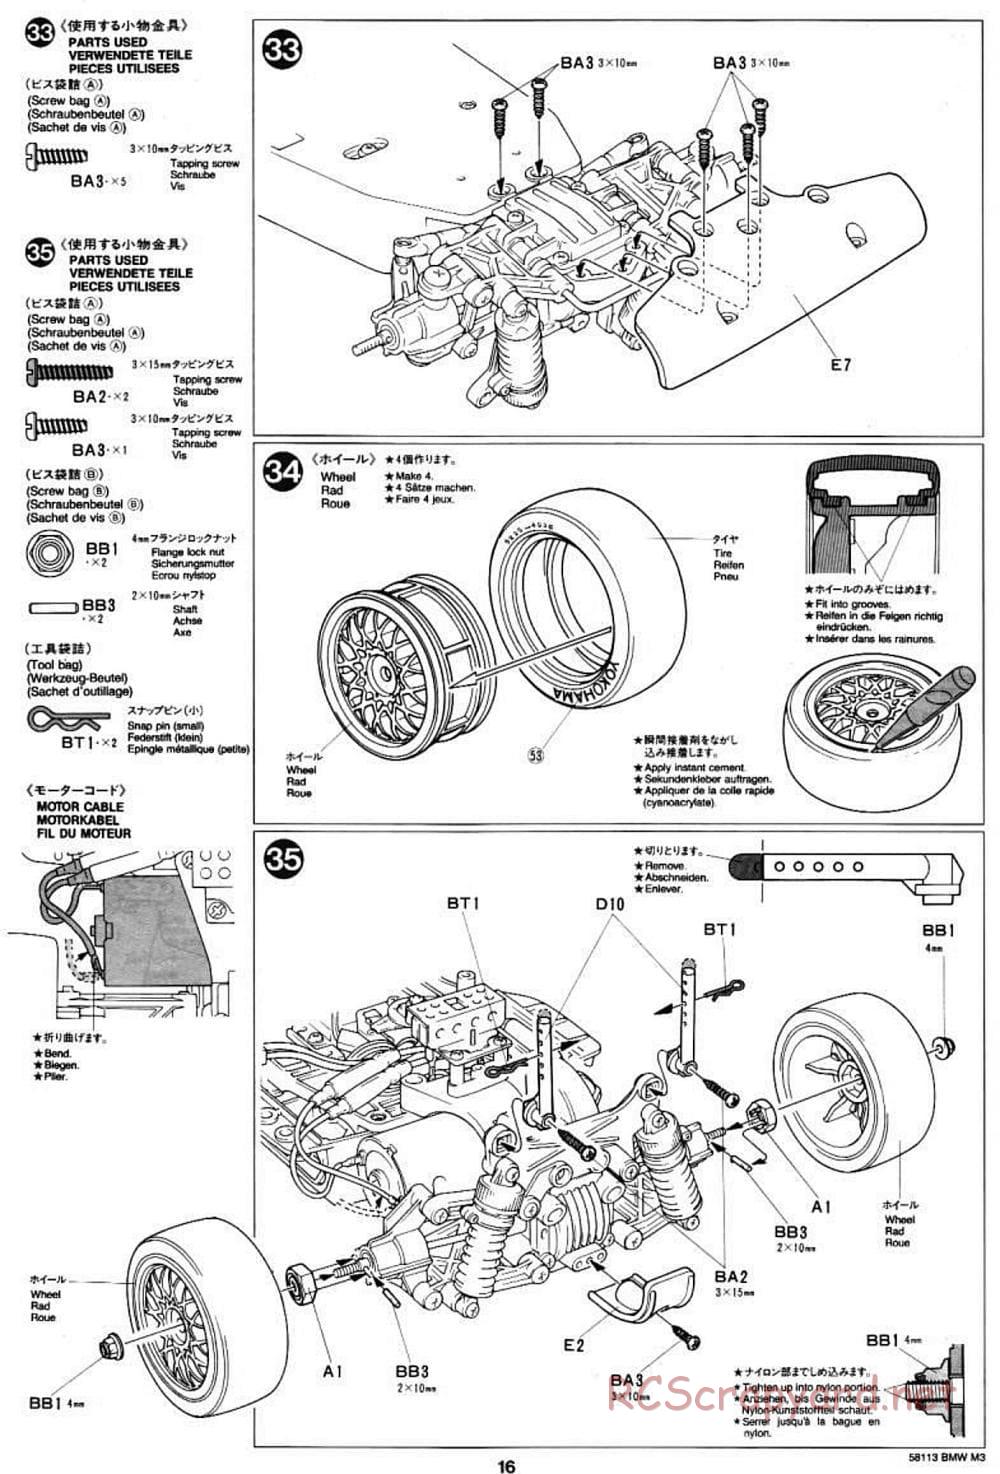 Tamiya - Schnitzer BMW M3 Sport Evo - TA-01 Chassis - Manual - Page 16